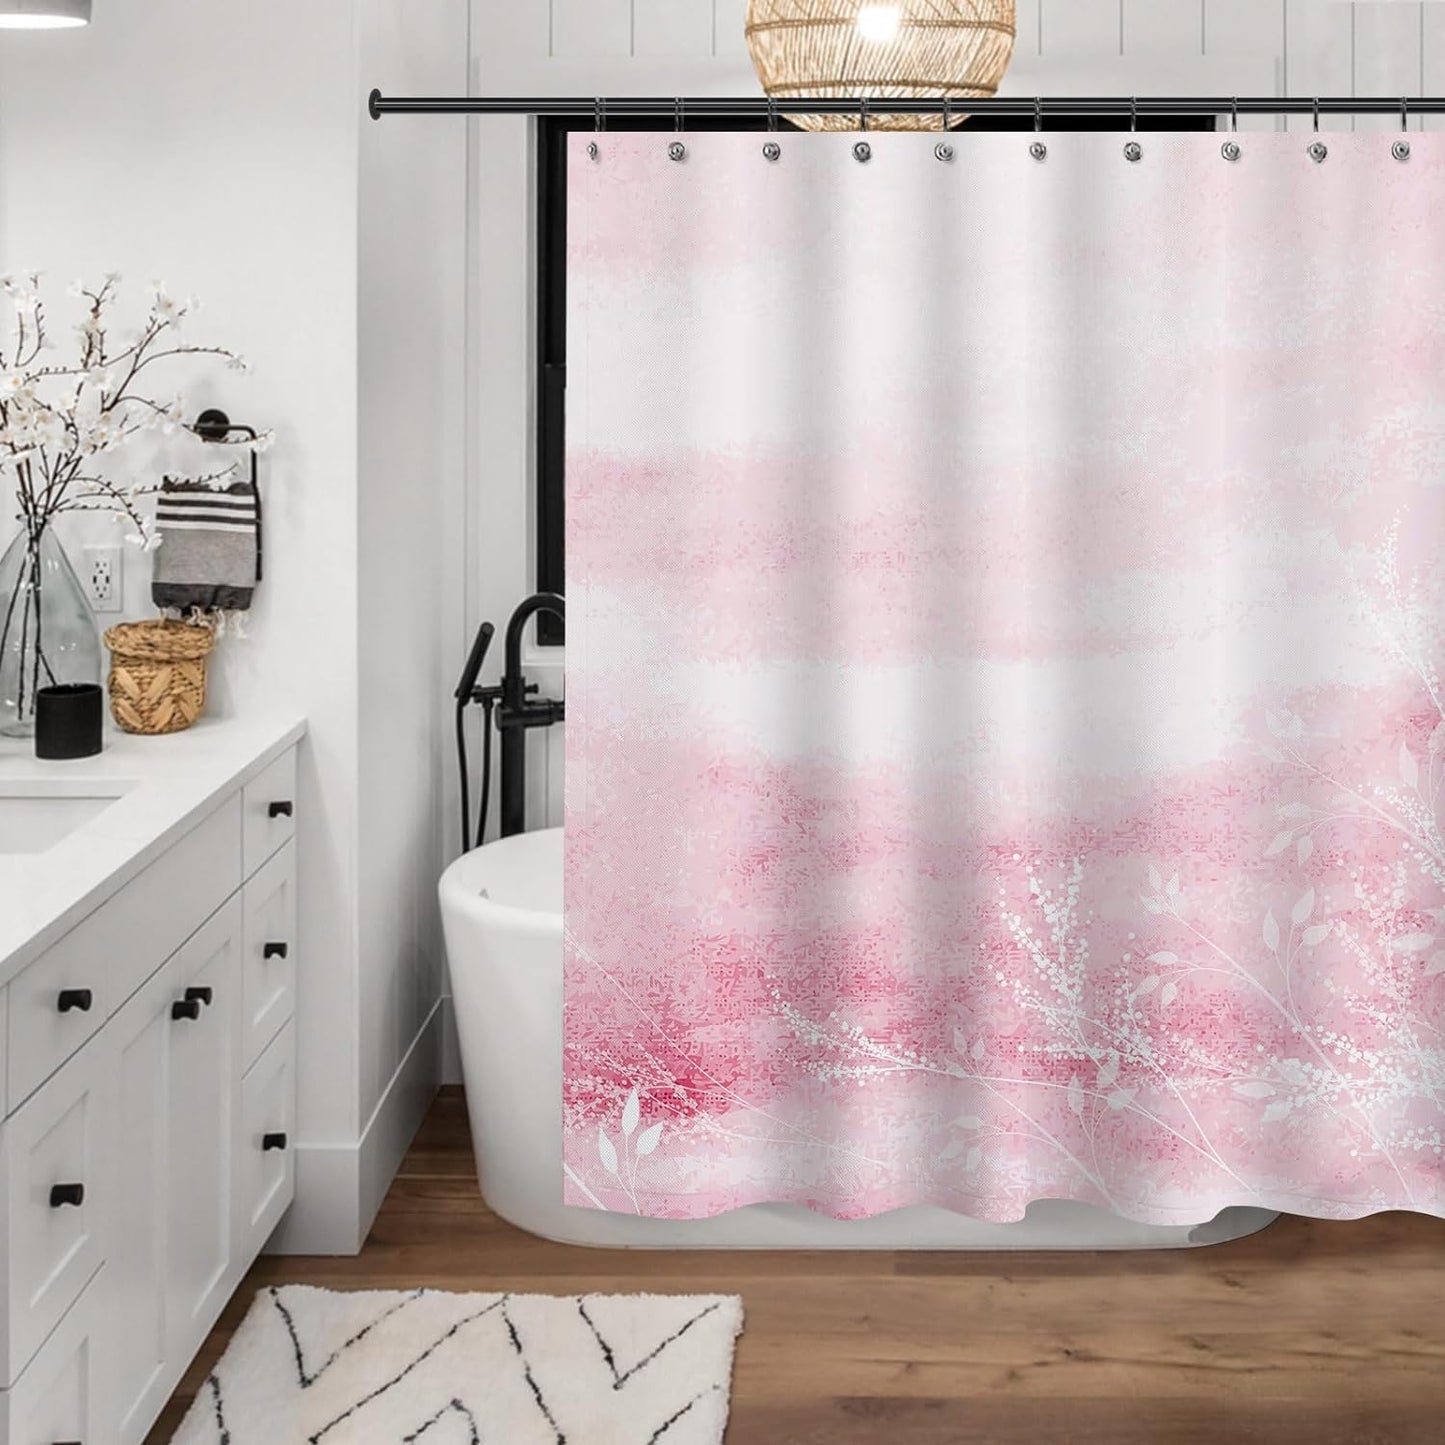 Sunlit Design Dreamy Shower Curtain, Flowering Vines in Pastel Cloud Fabric Shower Curtain with Purple Background, Bathroom Decoration Art Painting Shower Curtains, Purple, 71" x 71"